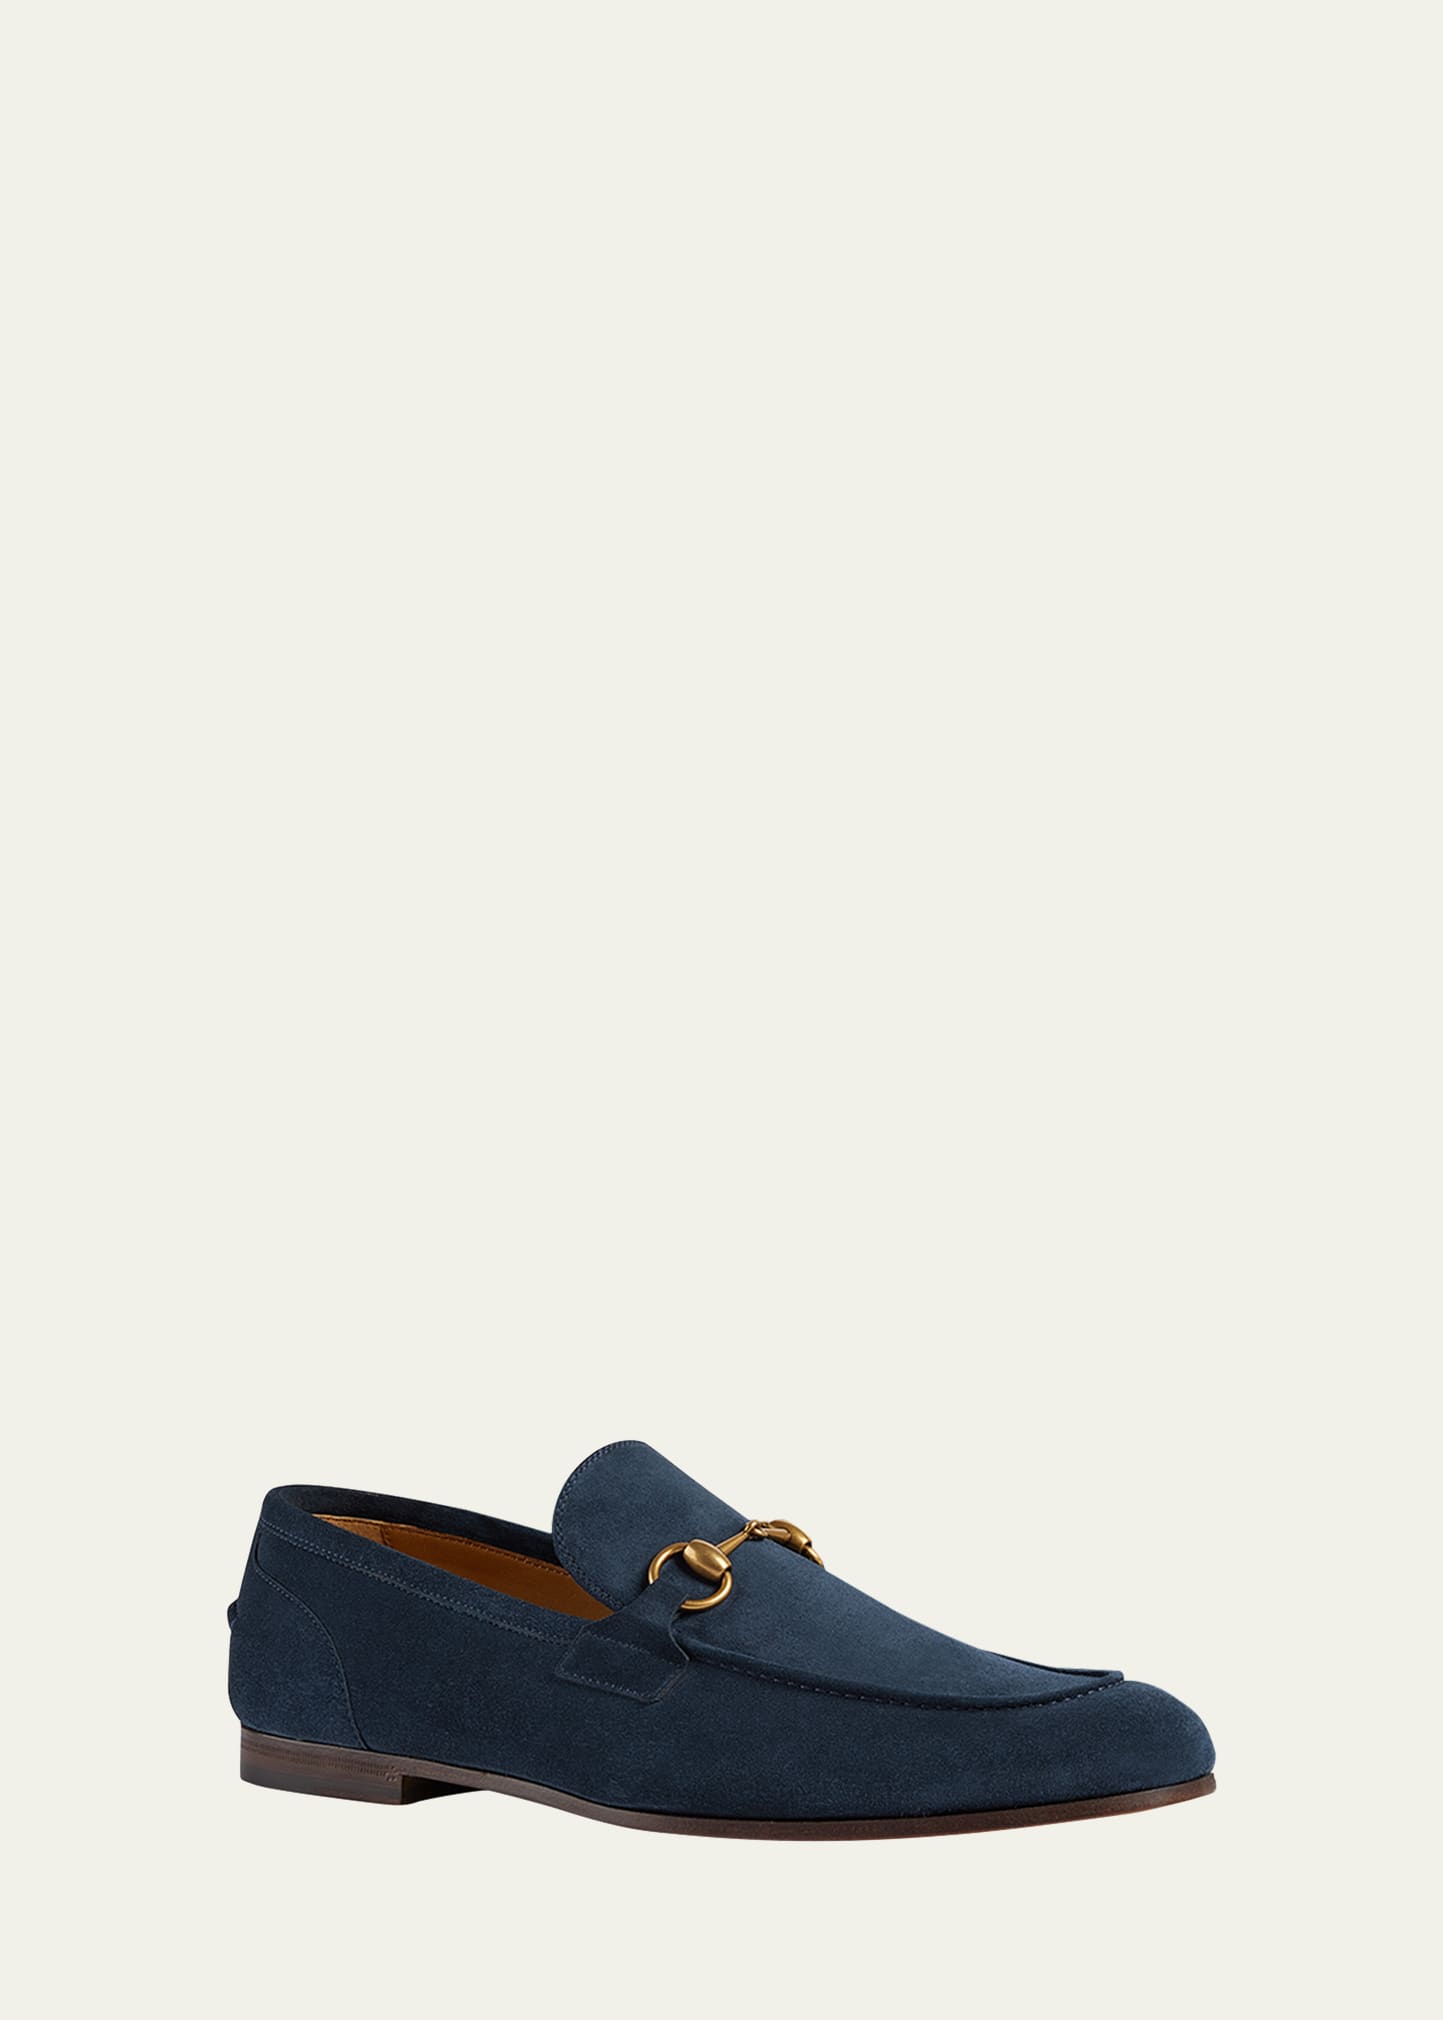 Gucci Men's New $920 Horsebit Loafers Shoes US 11.5